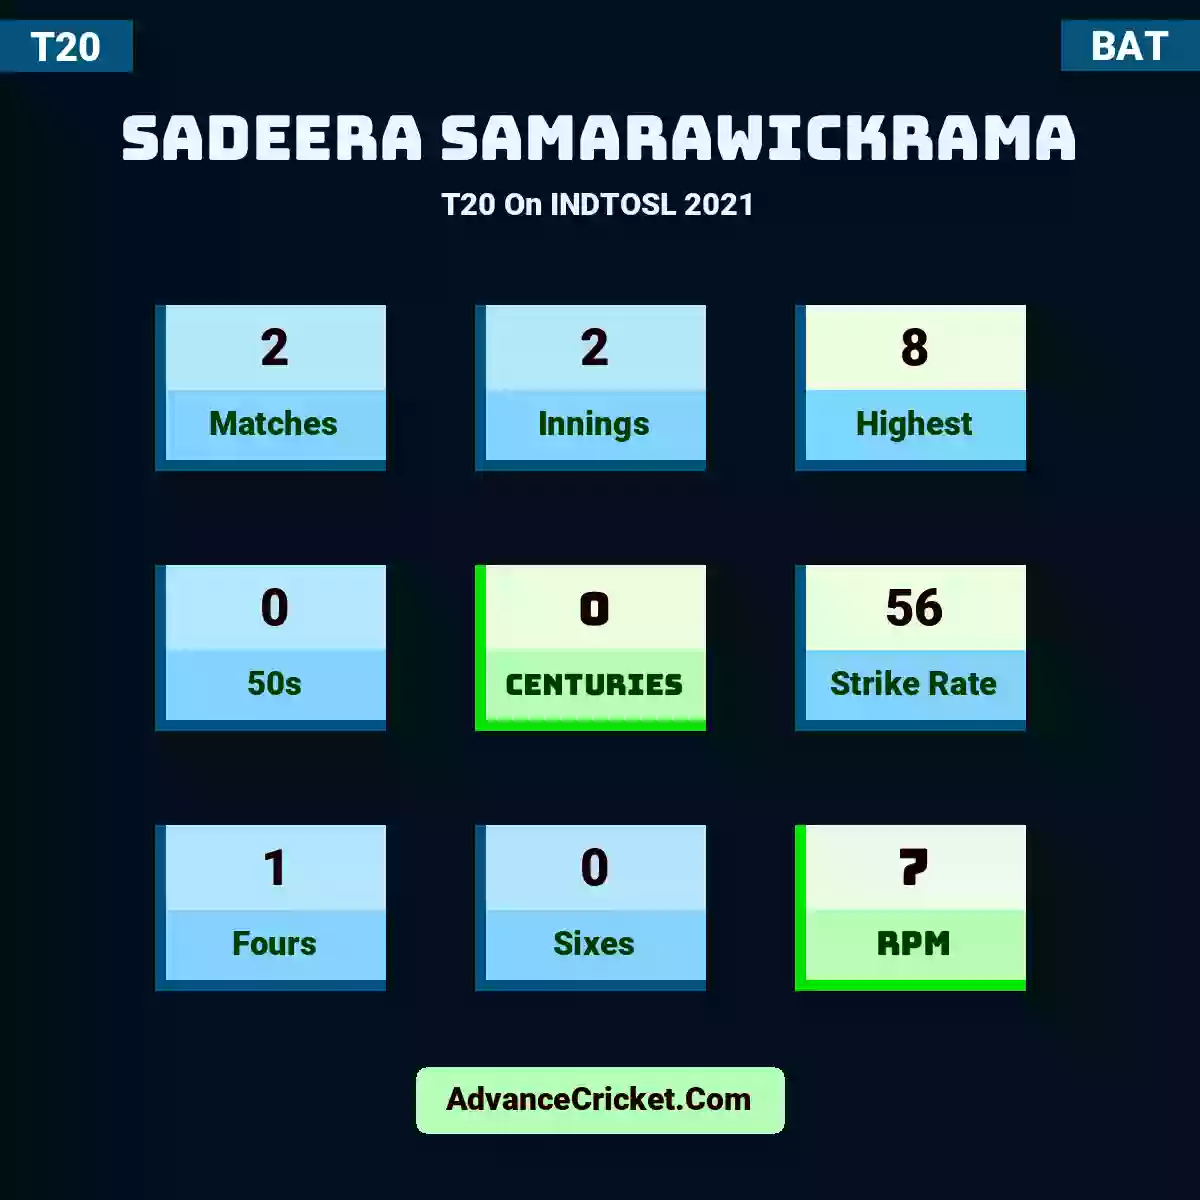 Sadeera Samarawickrama T20  On INDTOSL 2021, Sadeera Samarawickrama played 2 matches, scored 8 runs as highest, 0 half-centuries, and 0 centuries, with a strike rate of 56. S.Samarawickrama hit 1 fours and 0 sixes, with an RPM of 7.